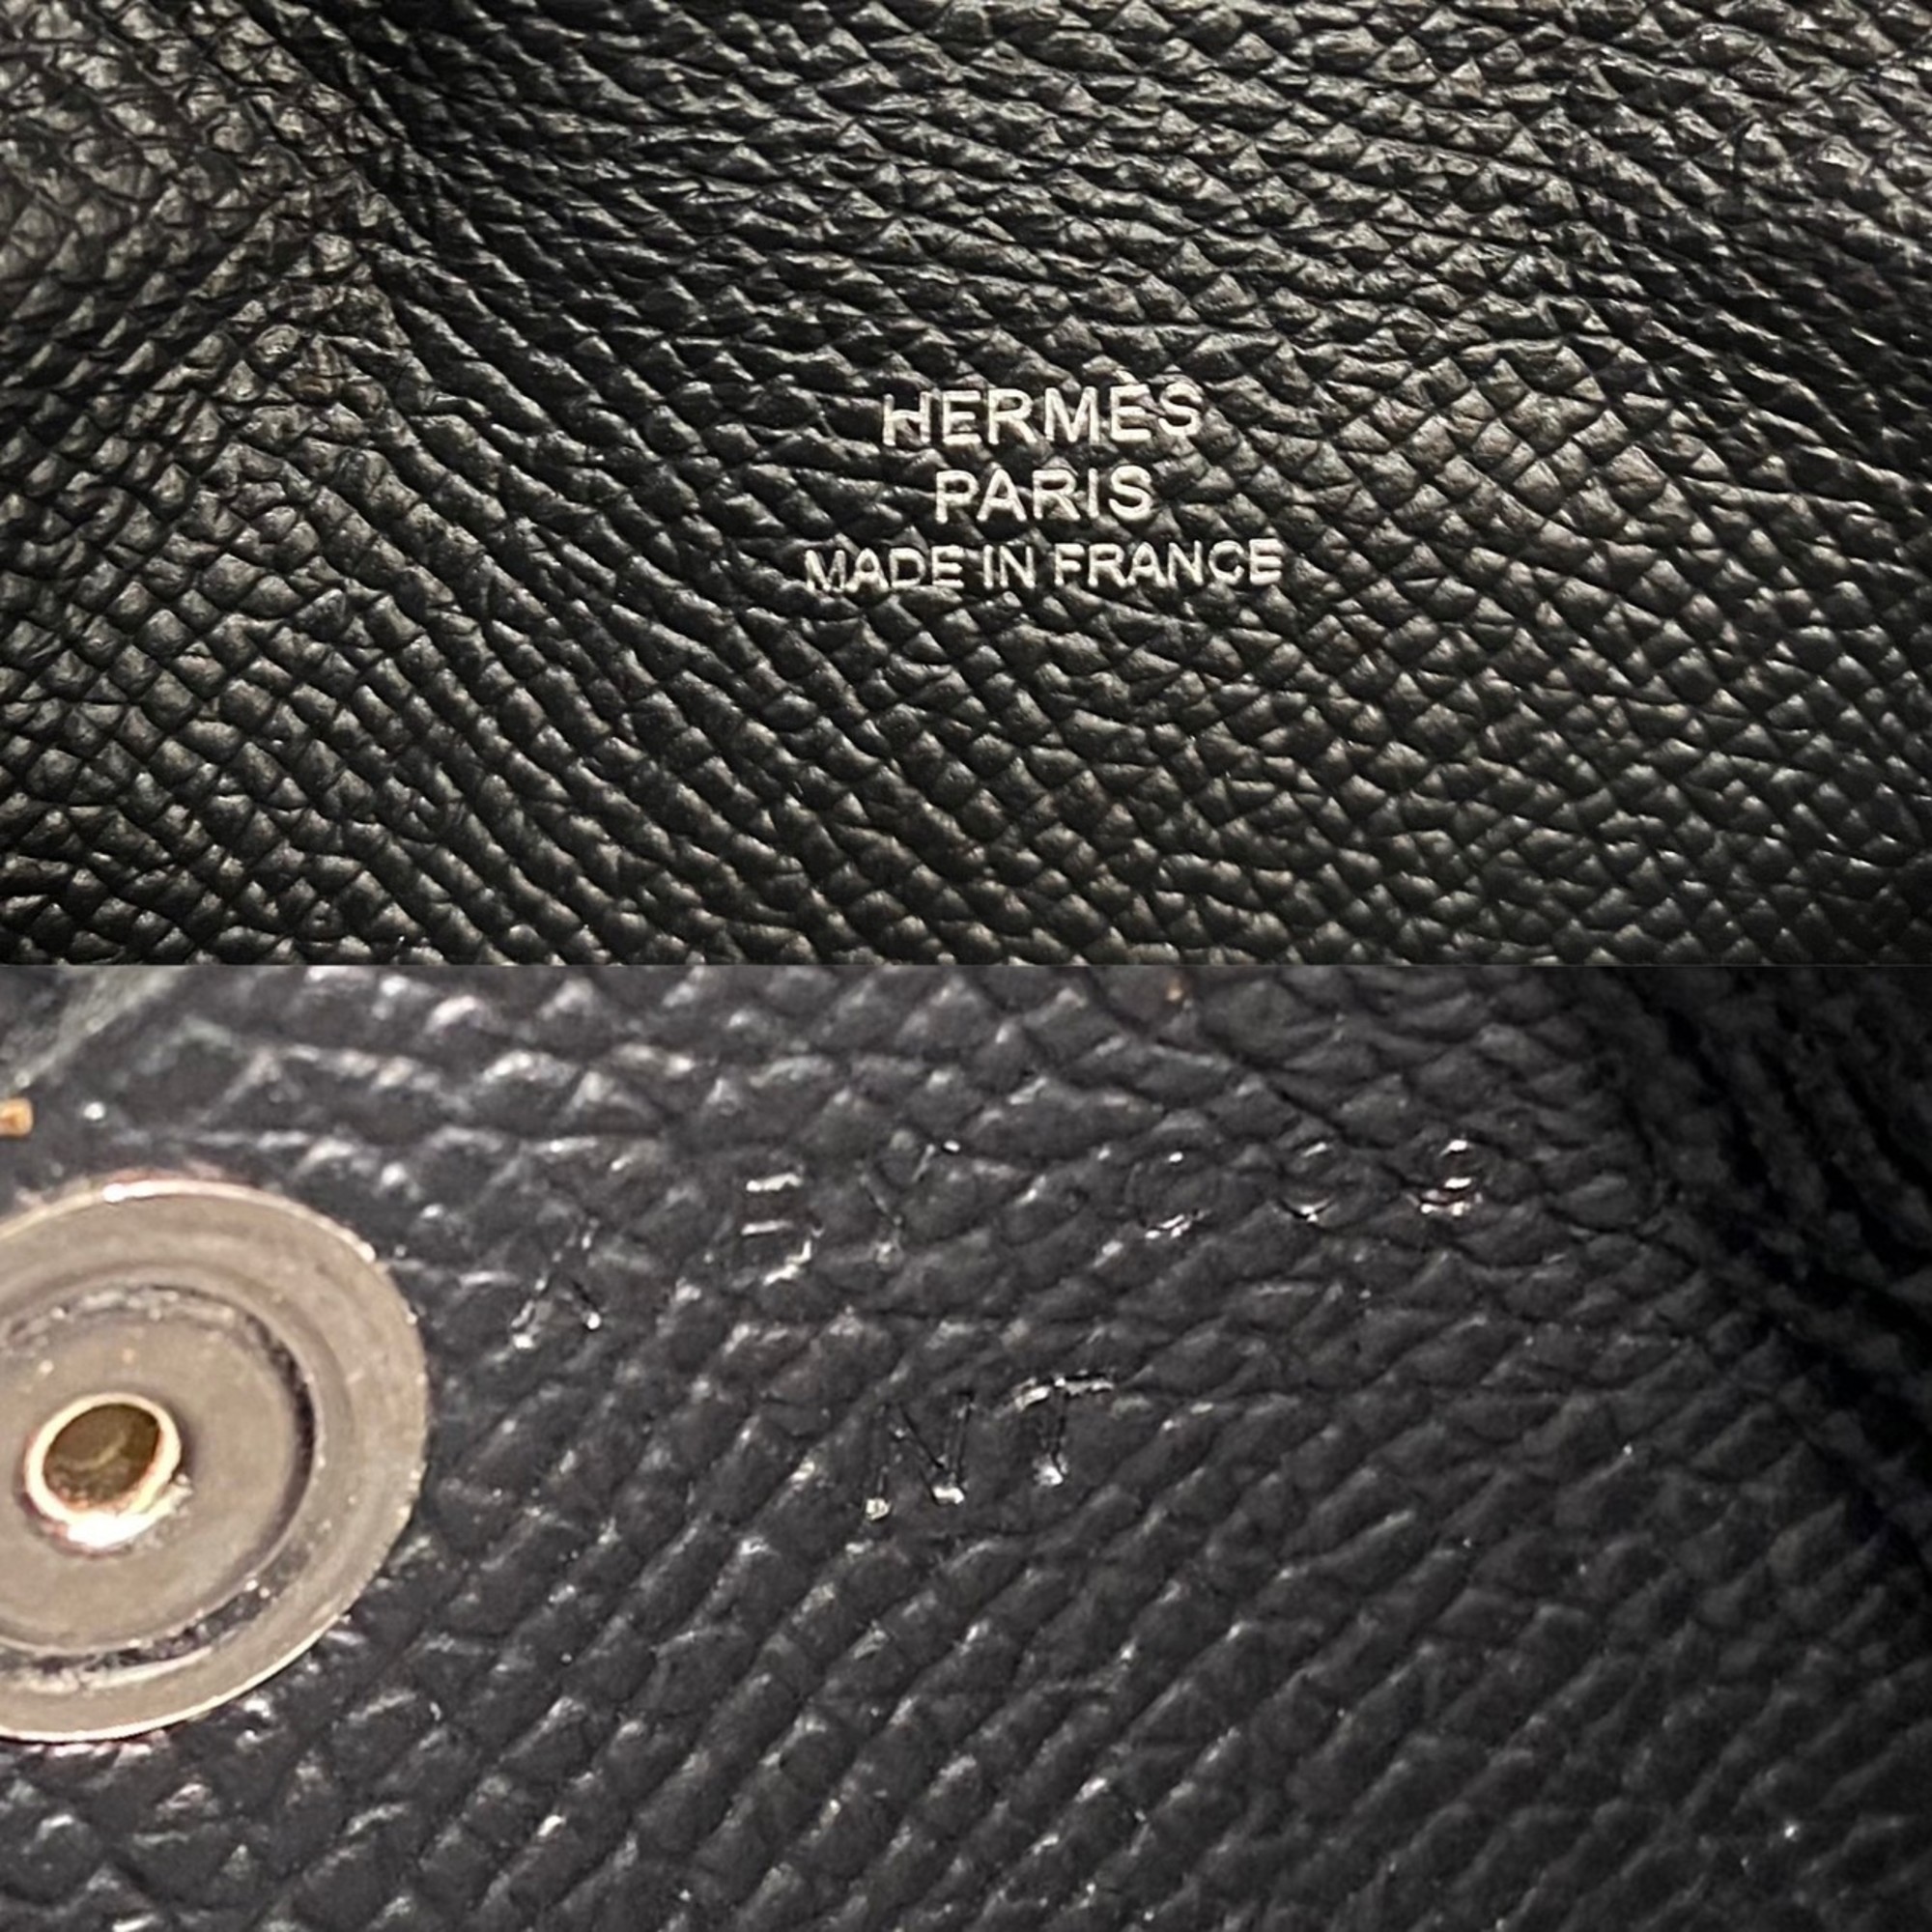 HERMES Calvi Vaux Epson Leather Genuine Card Case Holder Business Black